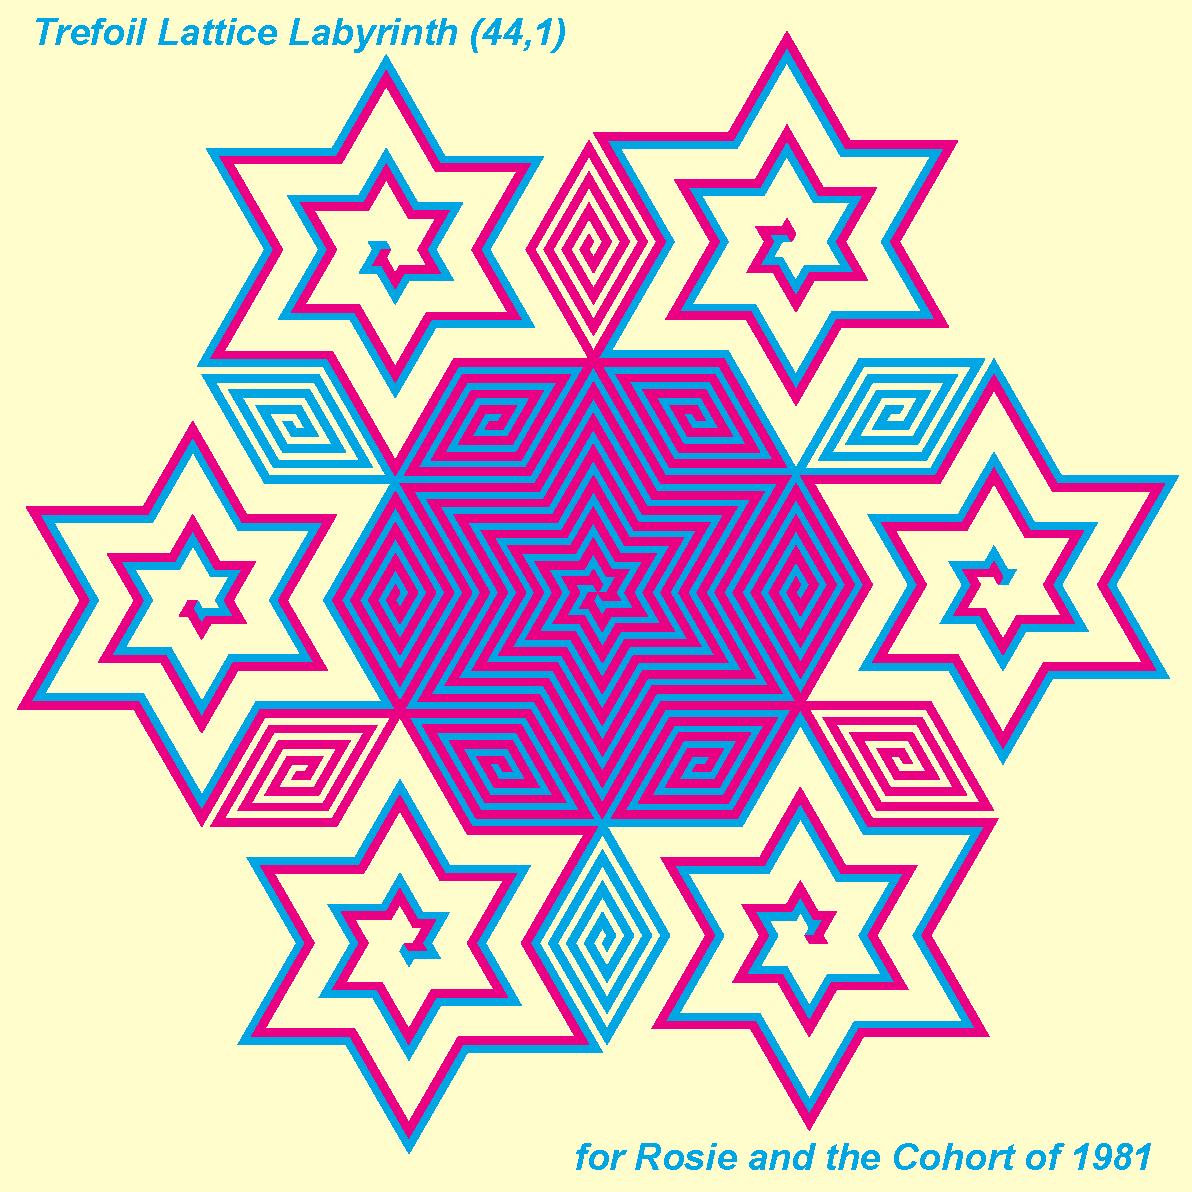 Image for entry 'Trefoil Lattice Lattice labyrinth (44,1)'